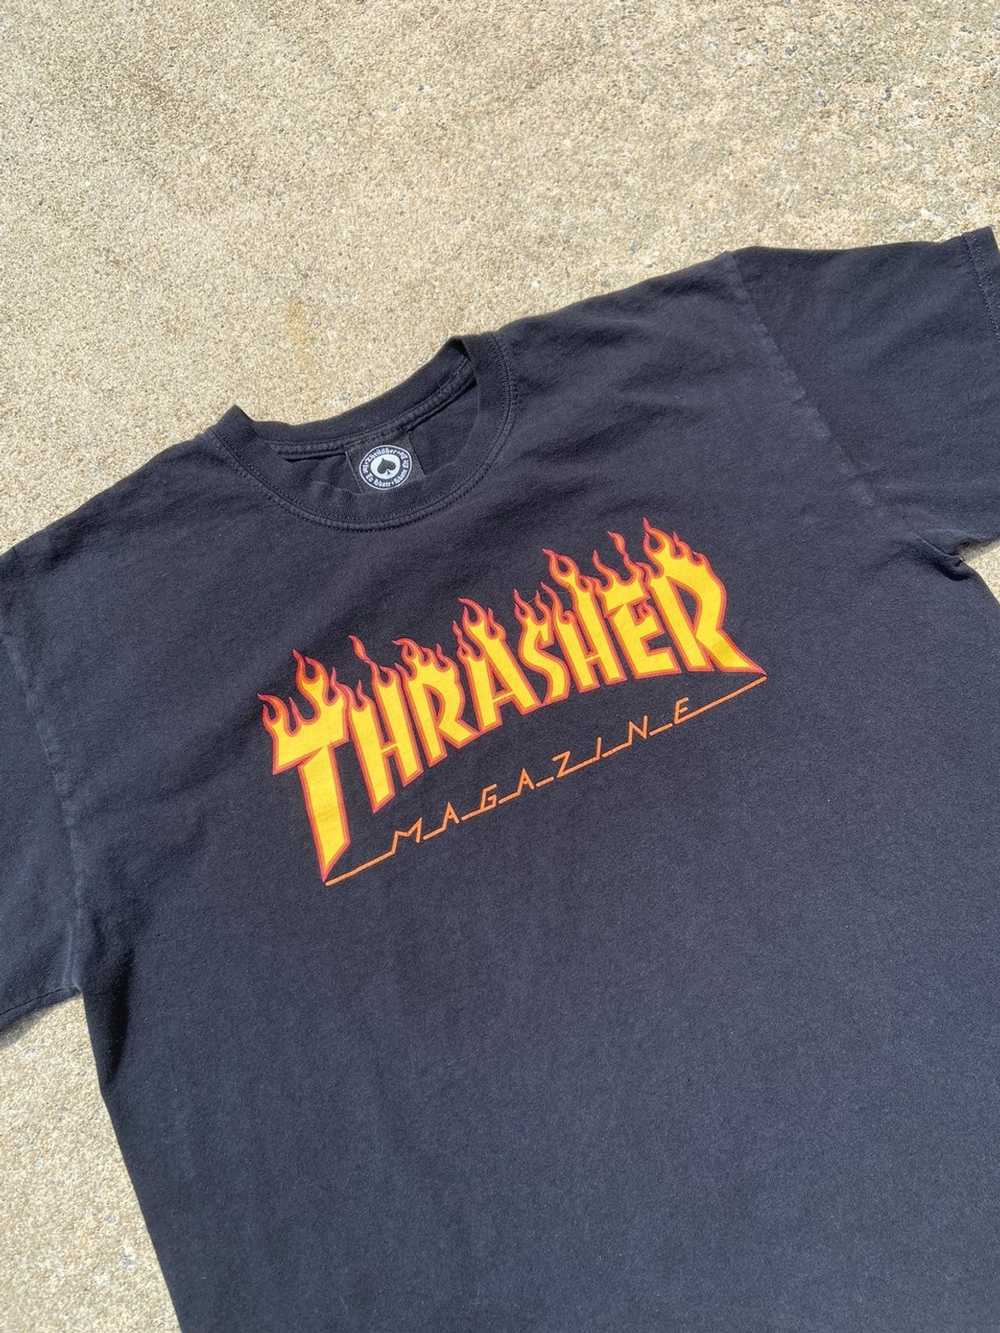 Thrasher Thrasher Magazine Classic T-Shirt - image 2